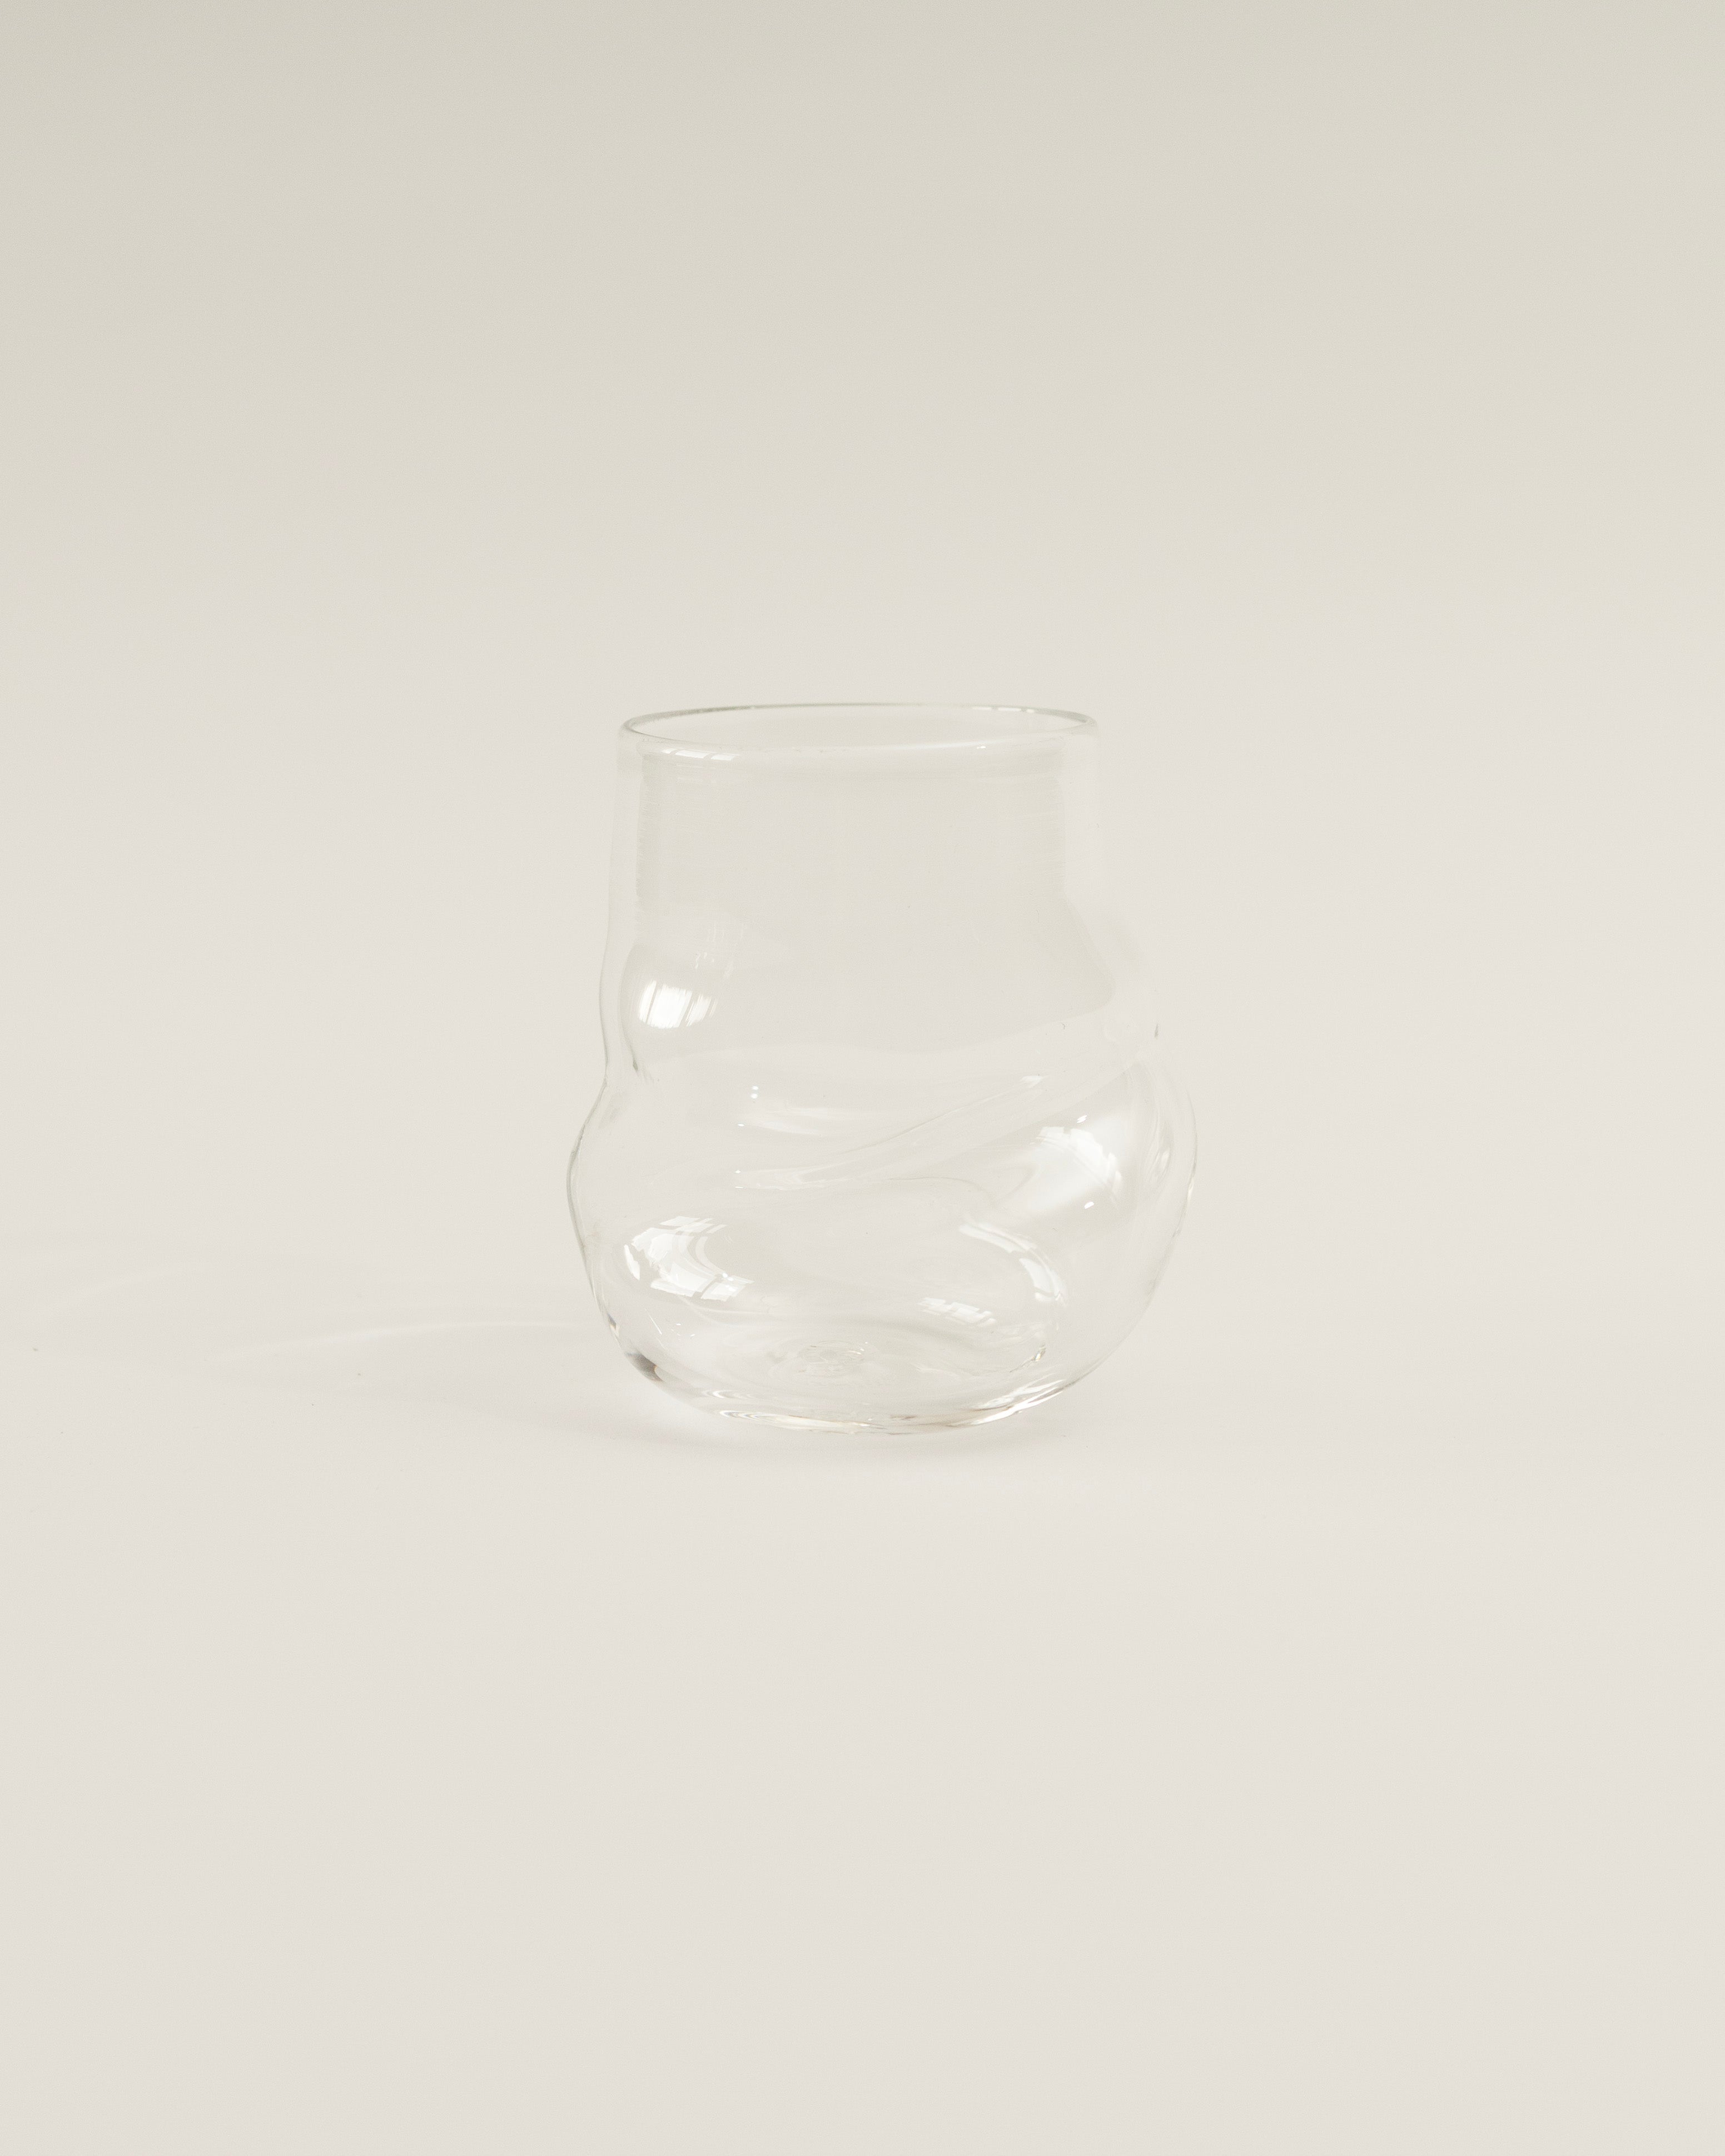 I. CORDIUS: CURLY WATER GLASS